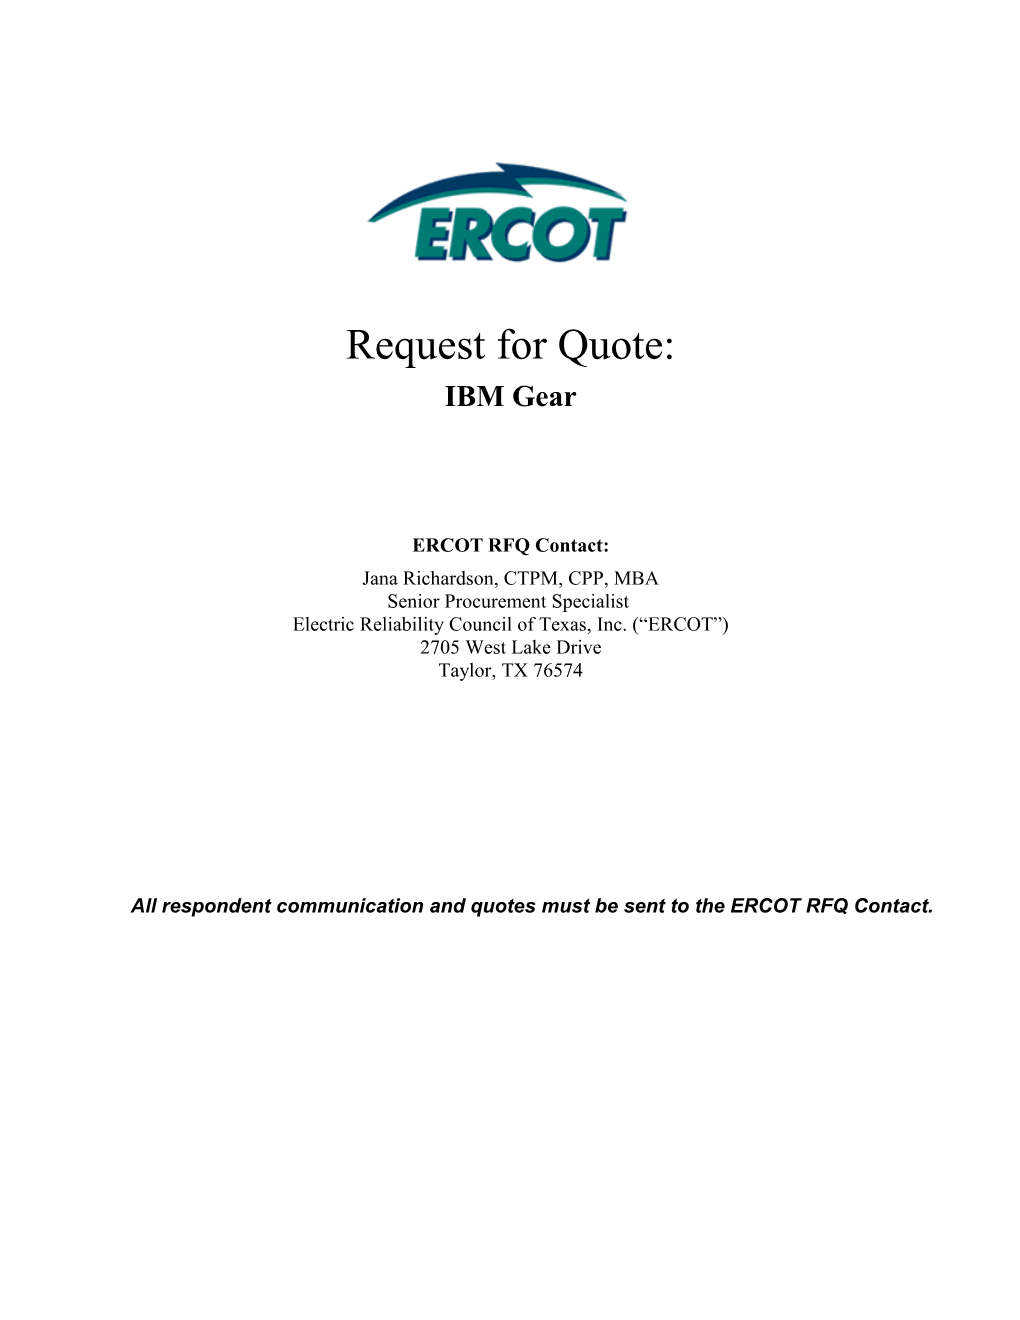 ERCOT RFQ Contact